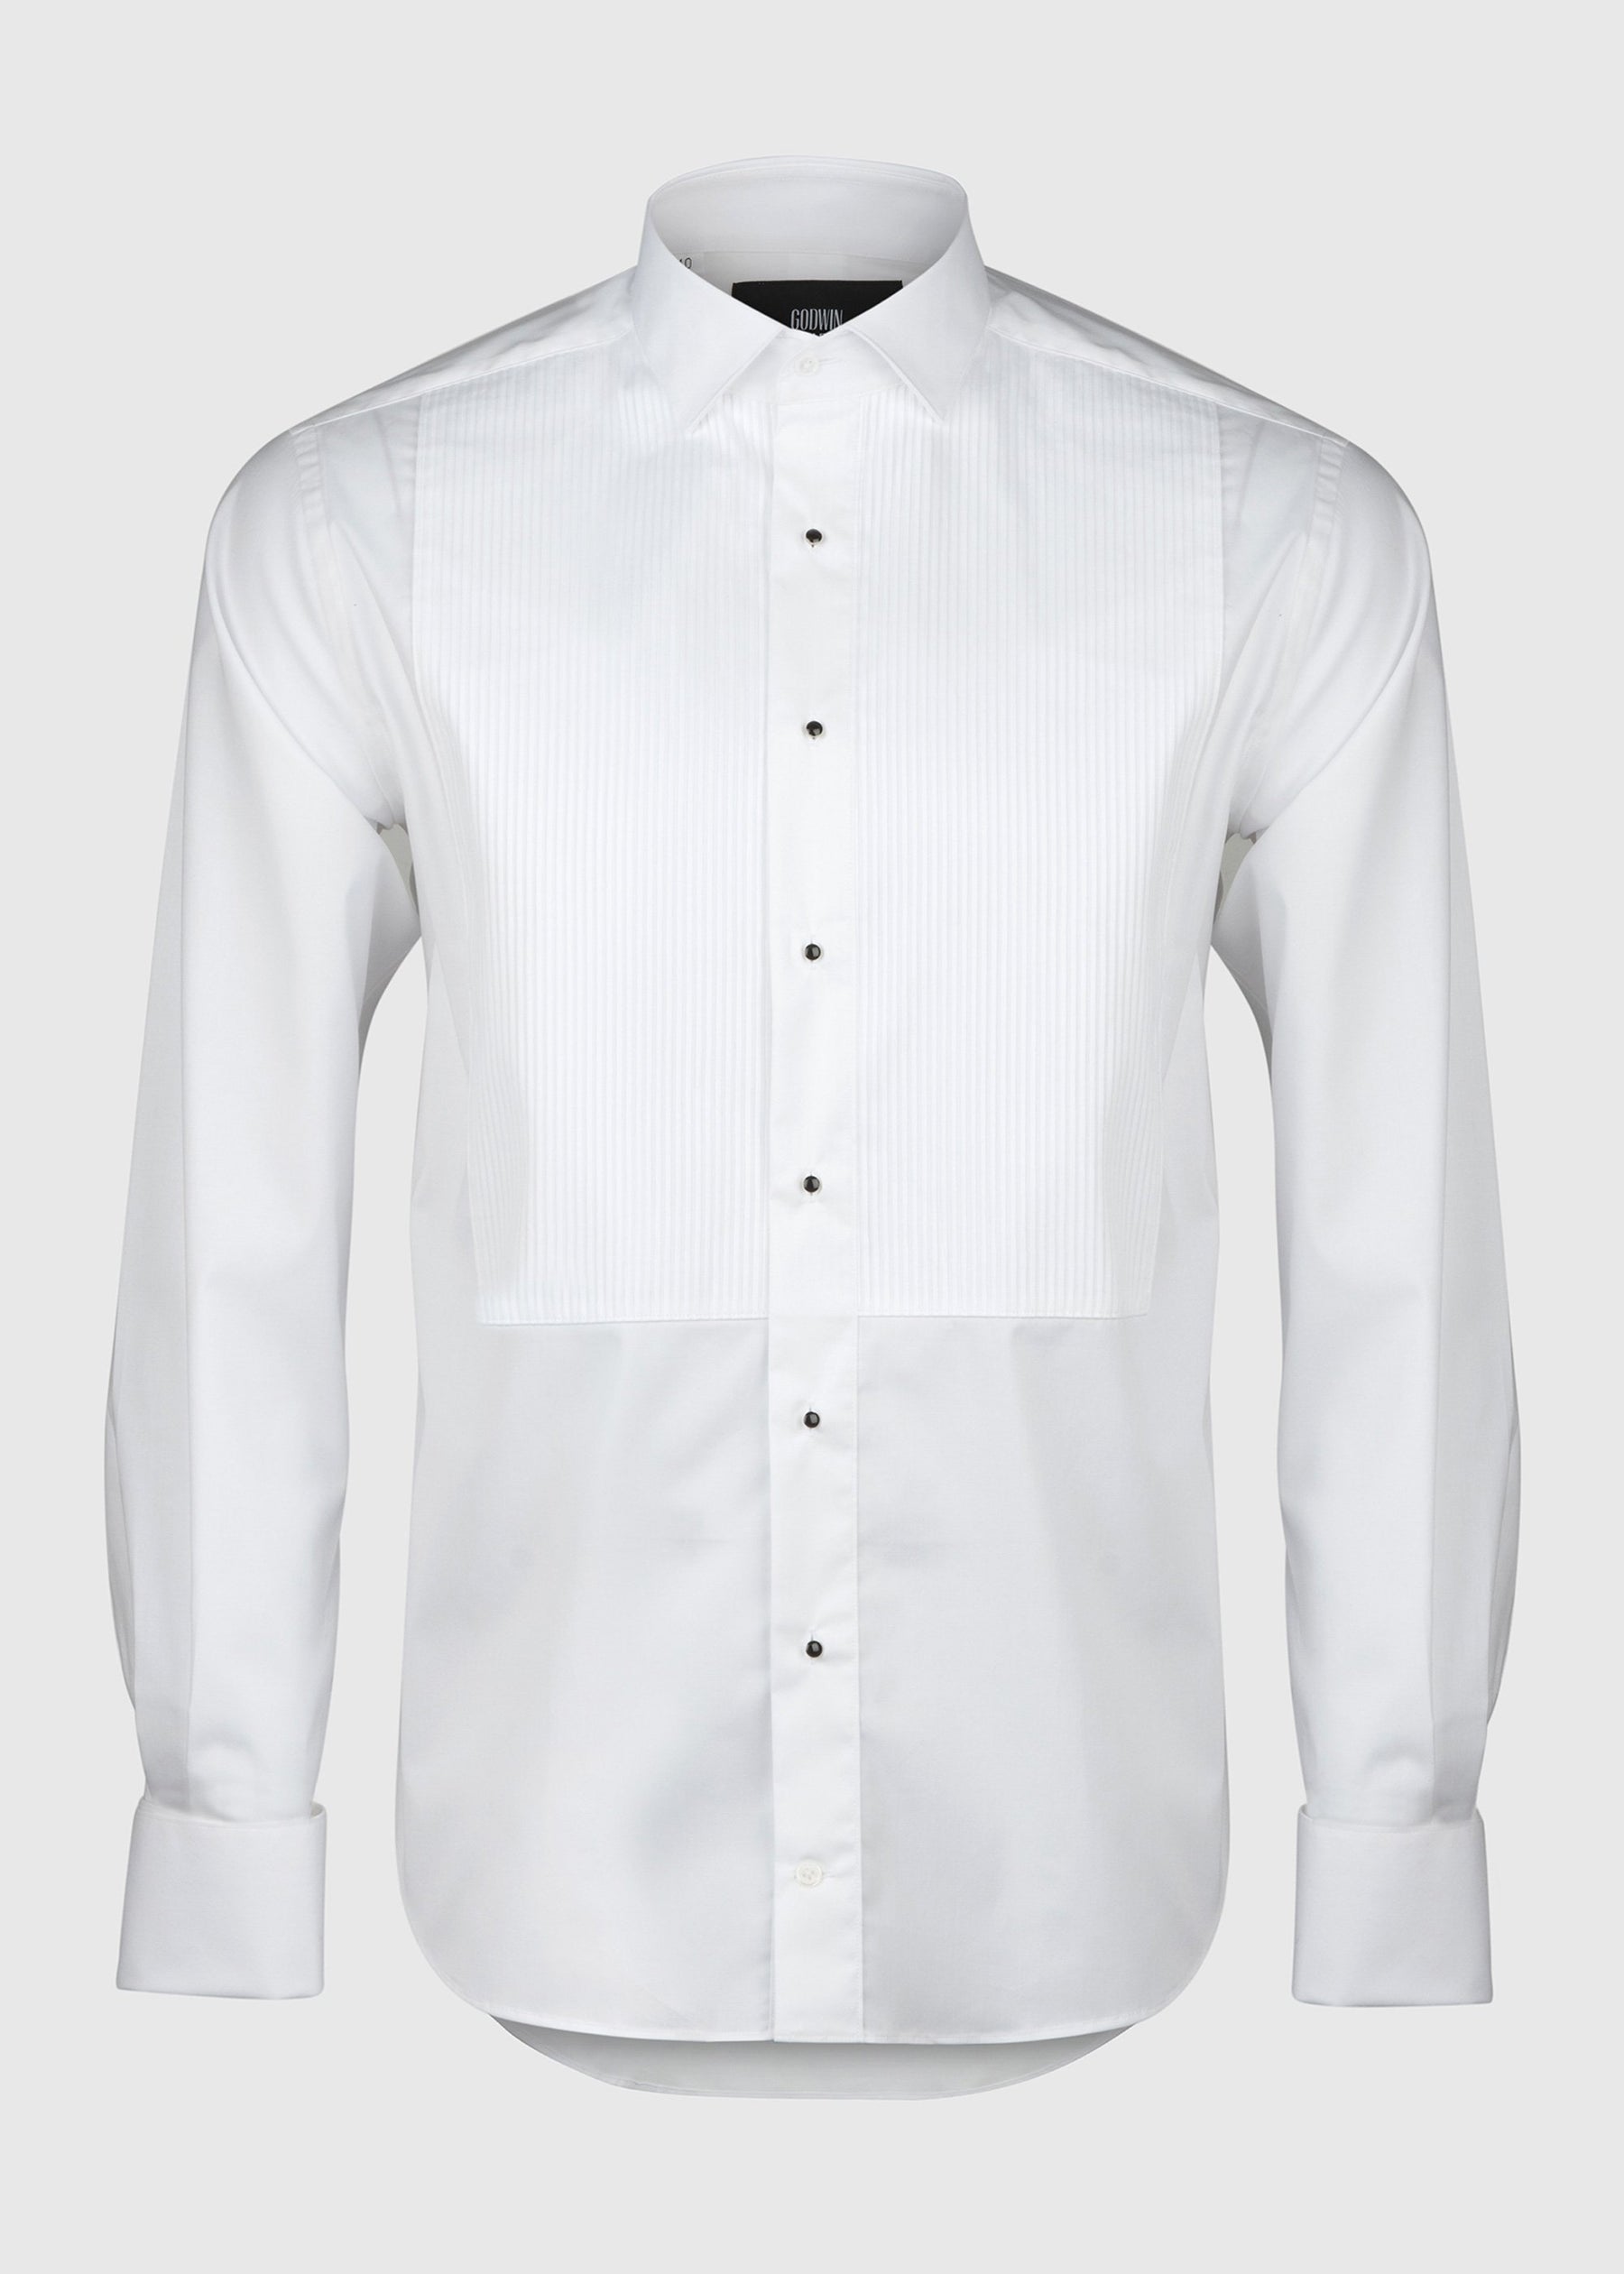 Bastien Dinner Shirt - White Poplin Cotton (Pleated Bib Front)